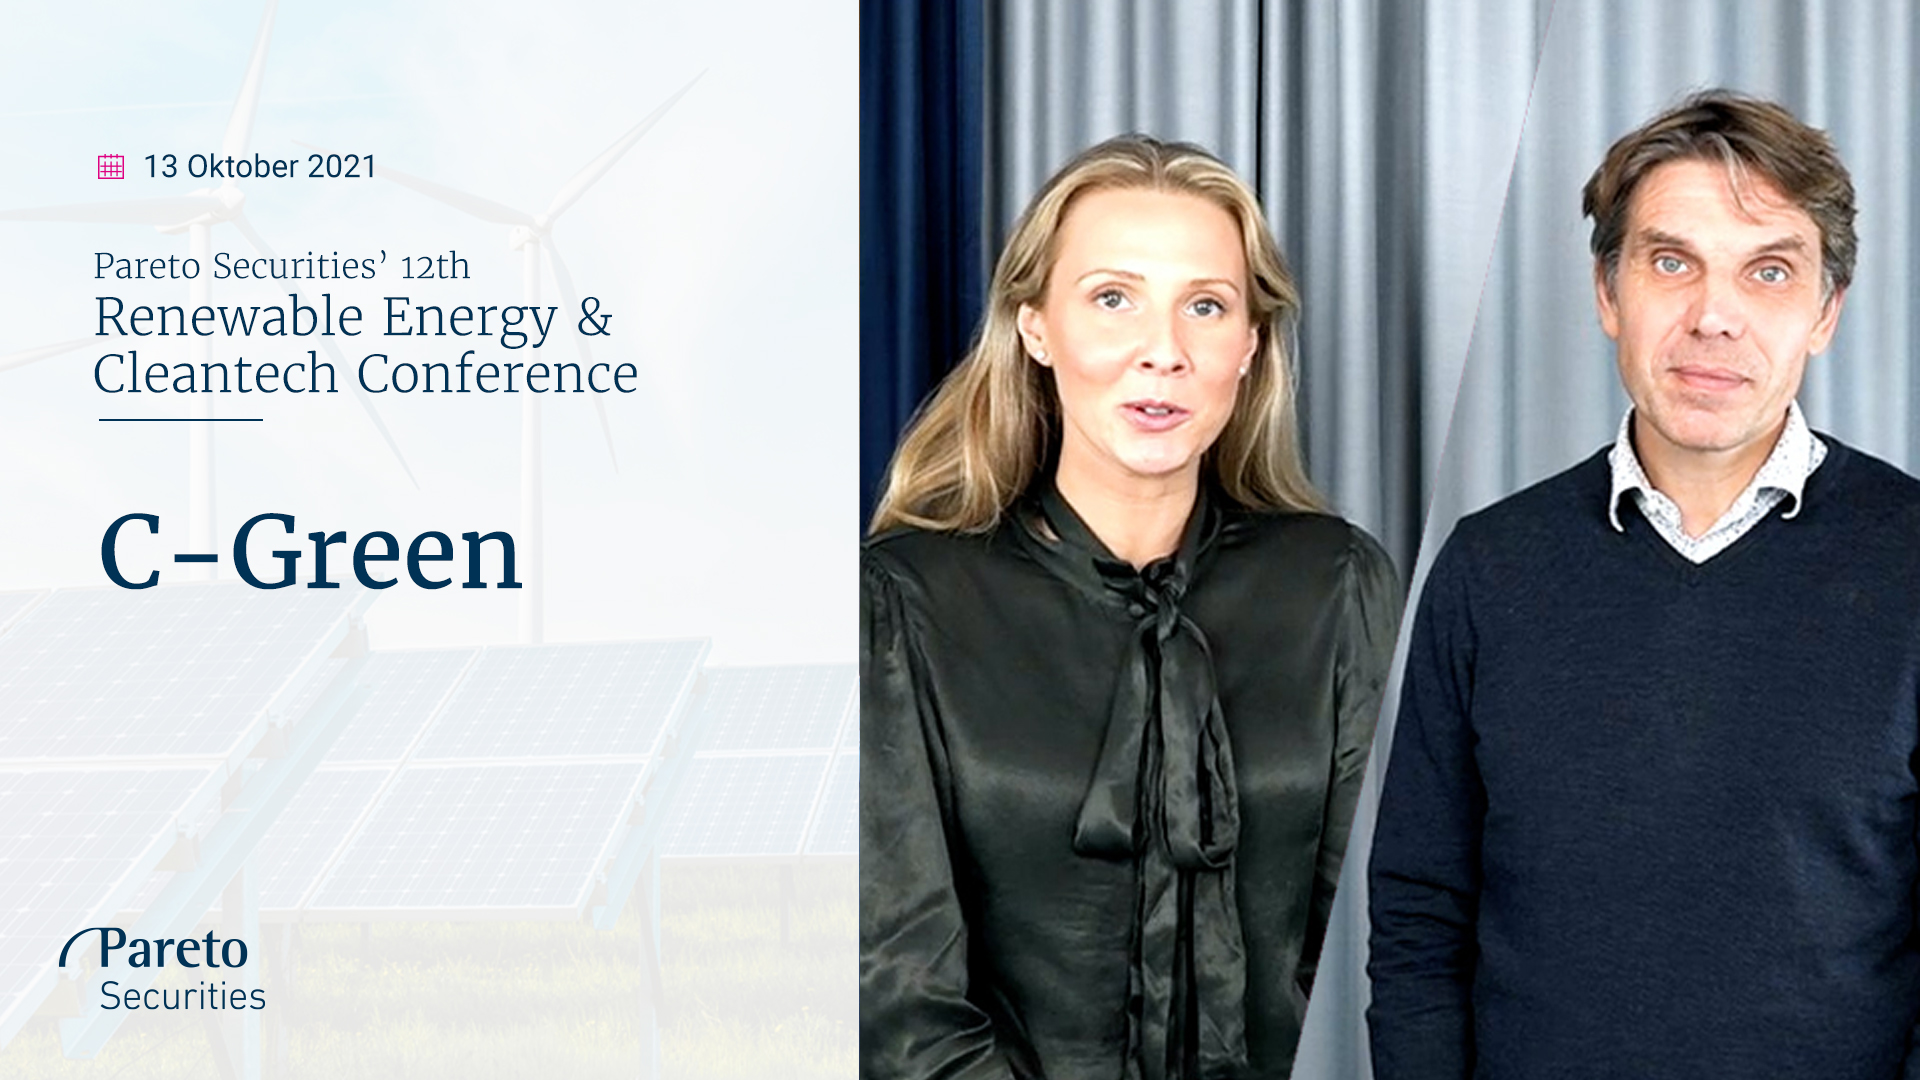 C-Green / Pareto Securities' Renewable Energy & Cleantech Conference